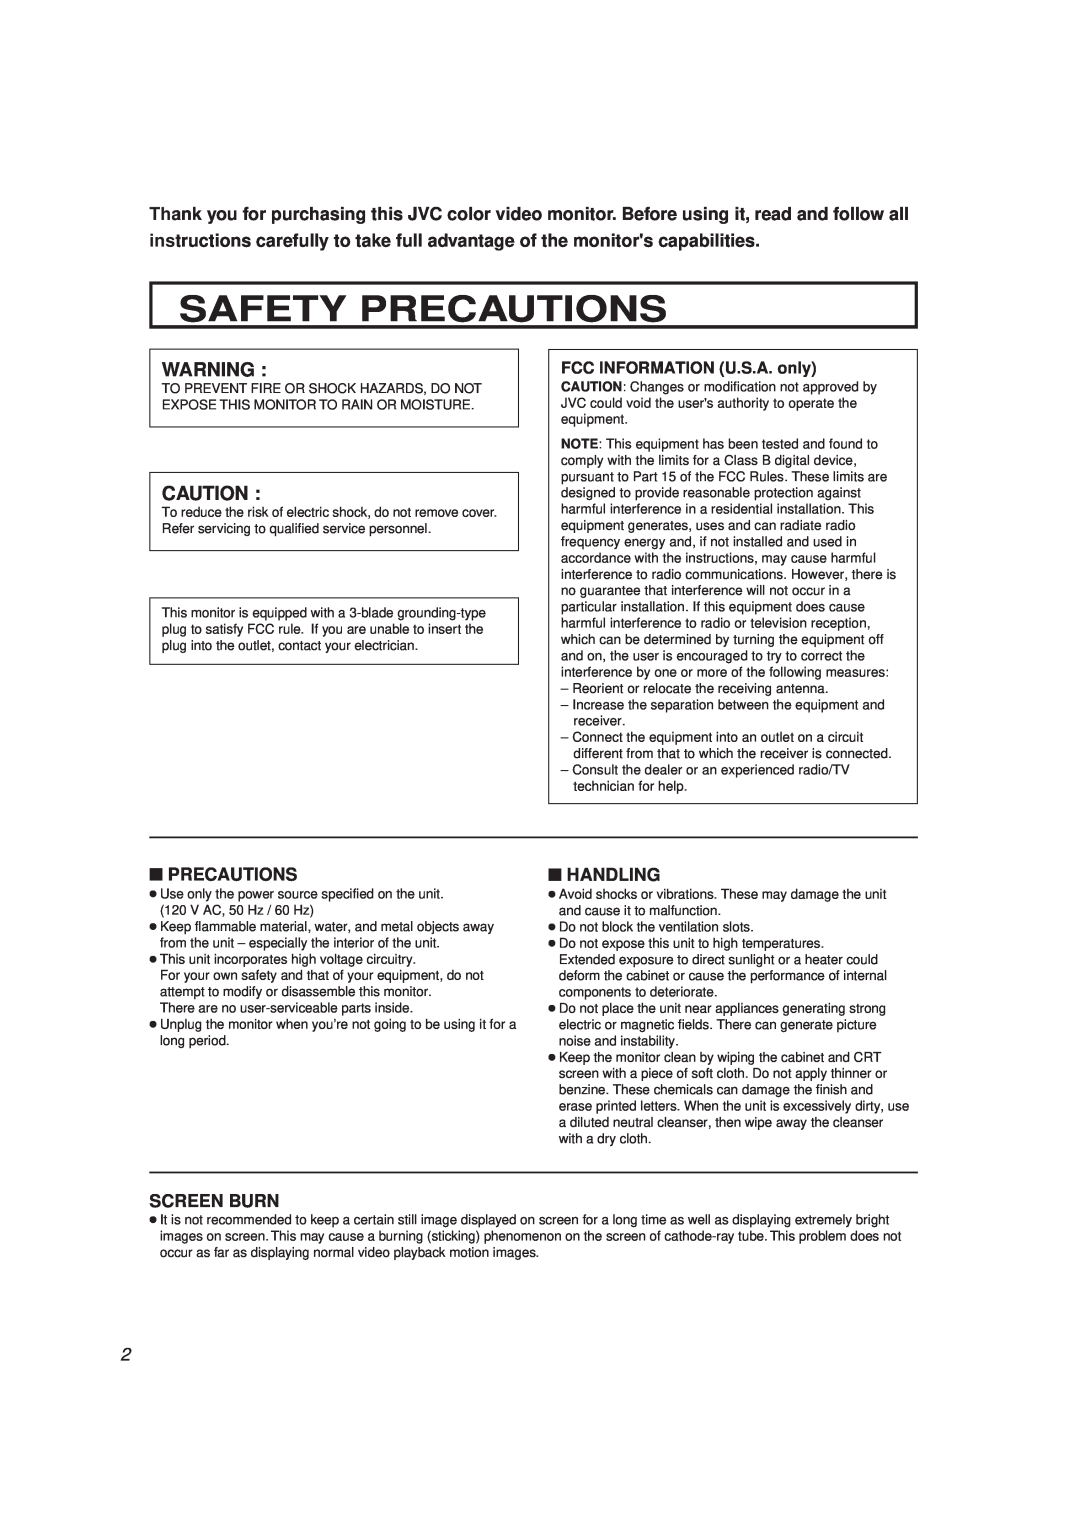 JVC TM-H1375SU manual Safety Precautions, FCC INFORMATION U.S.A. only, Handling, Screen Burn 